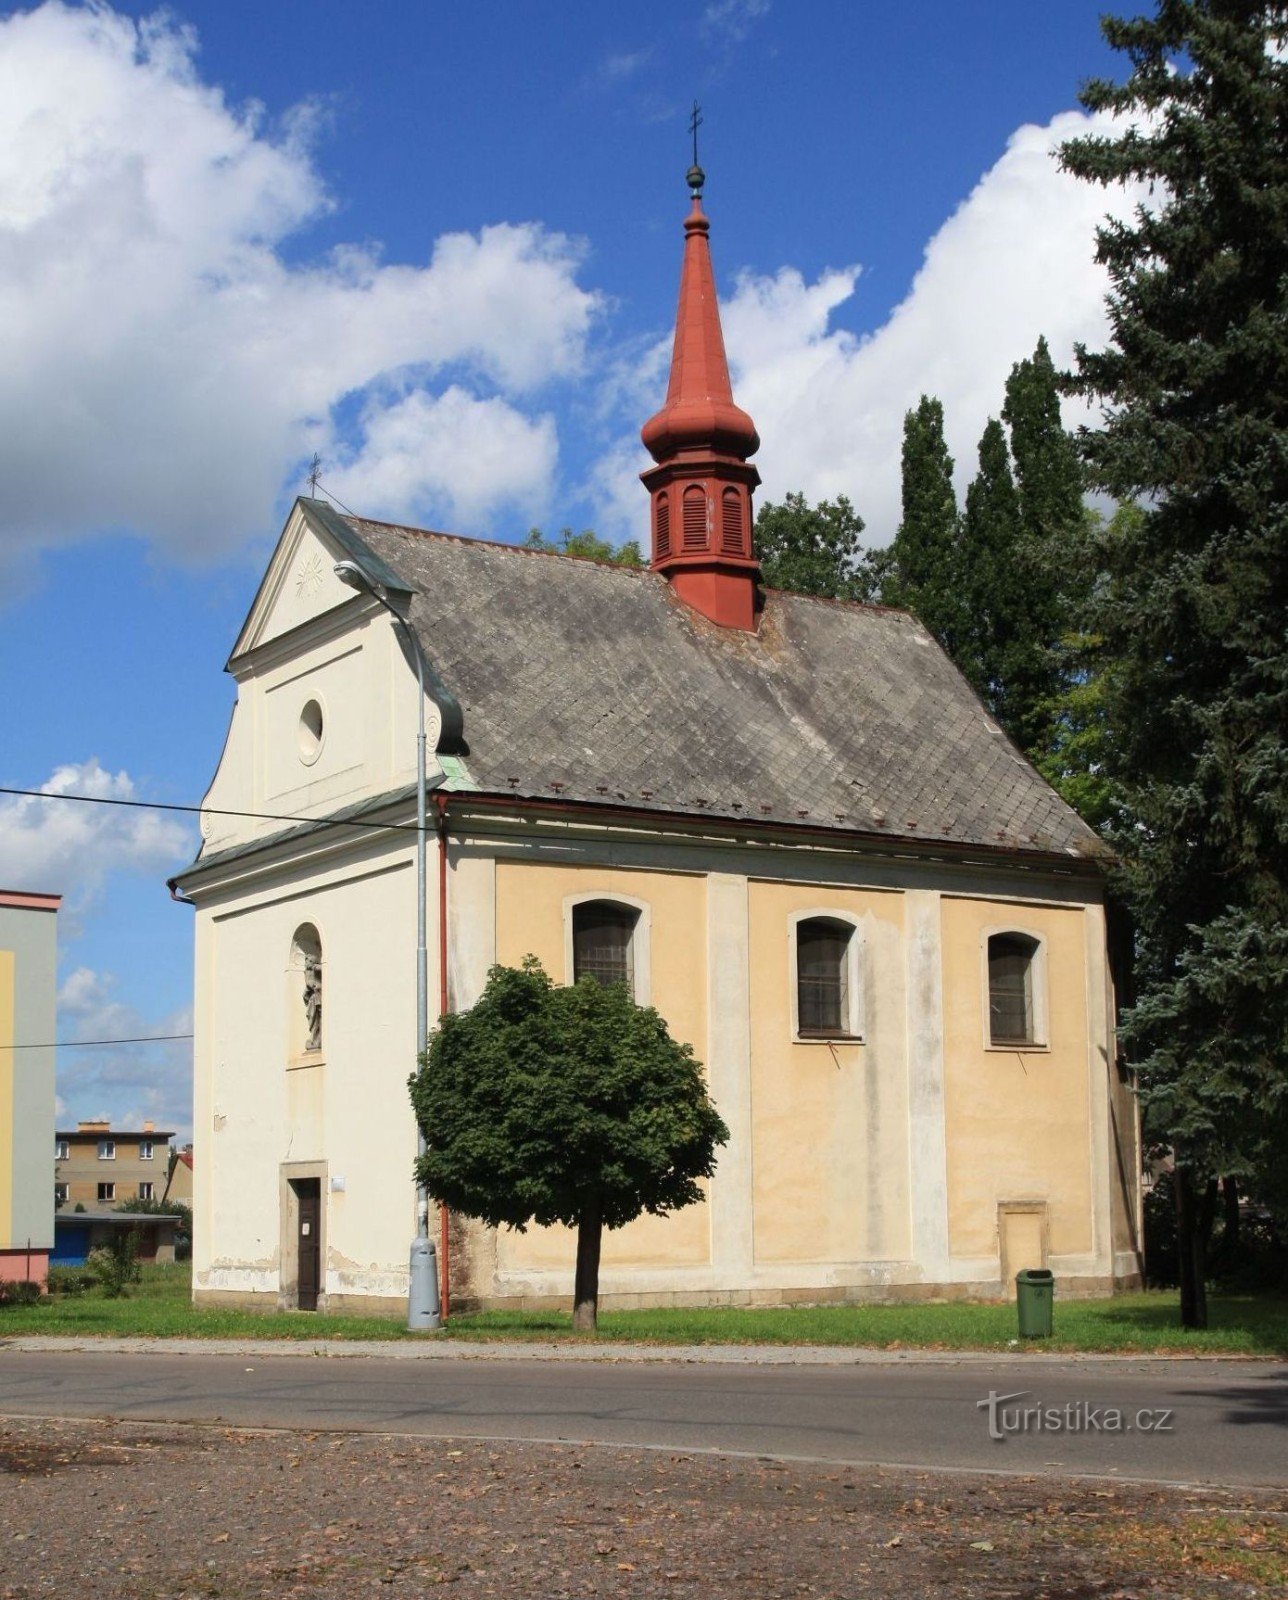 Ústí nad Orlicí - chapelle de St. Anne